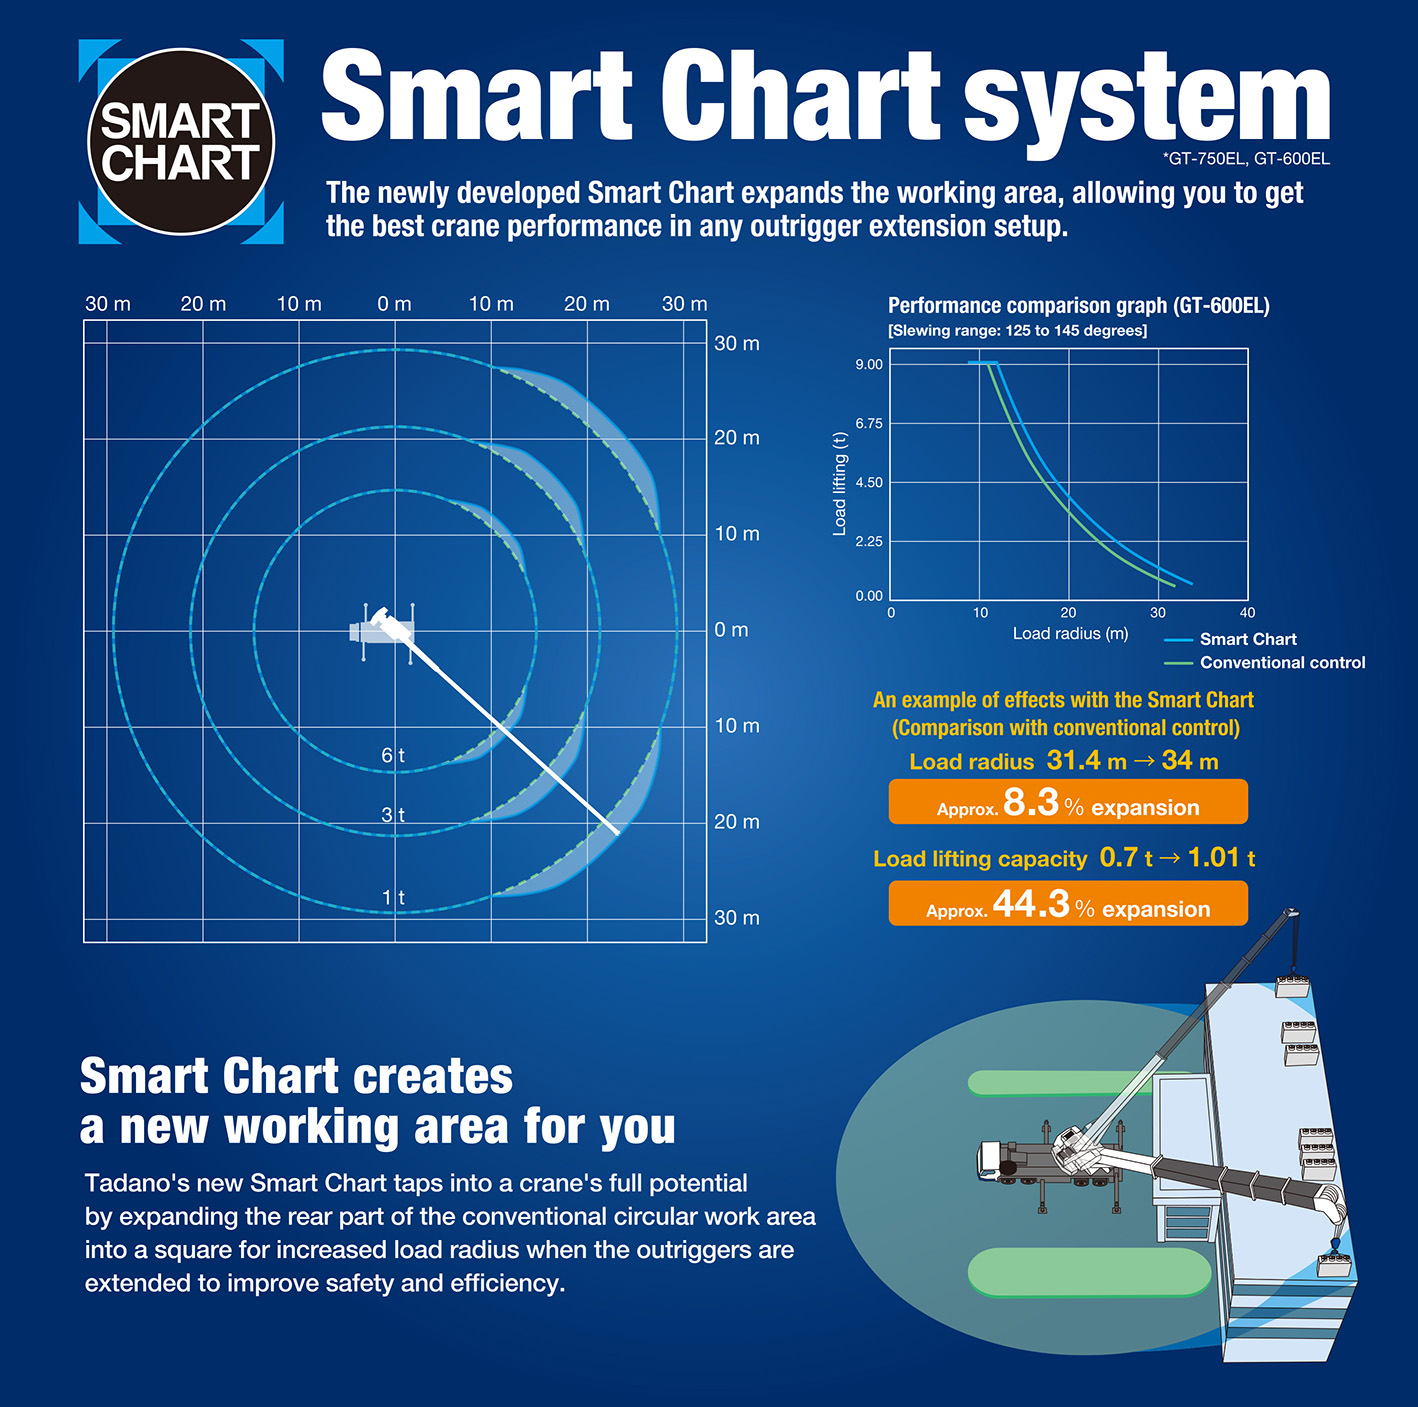 Smart Chart system